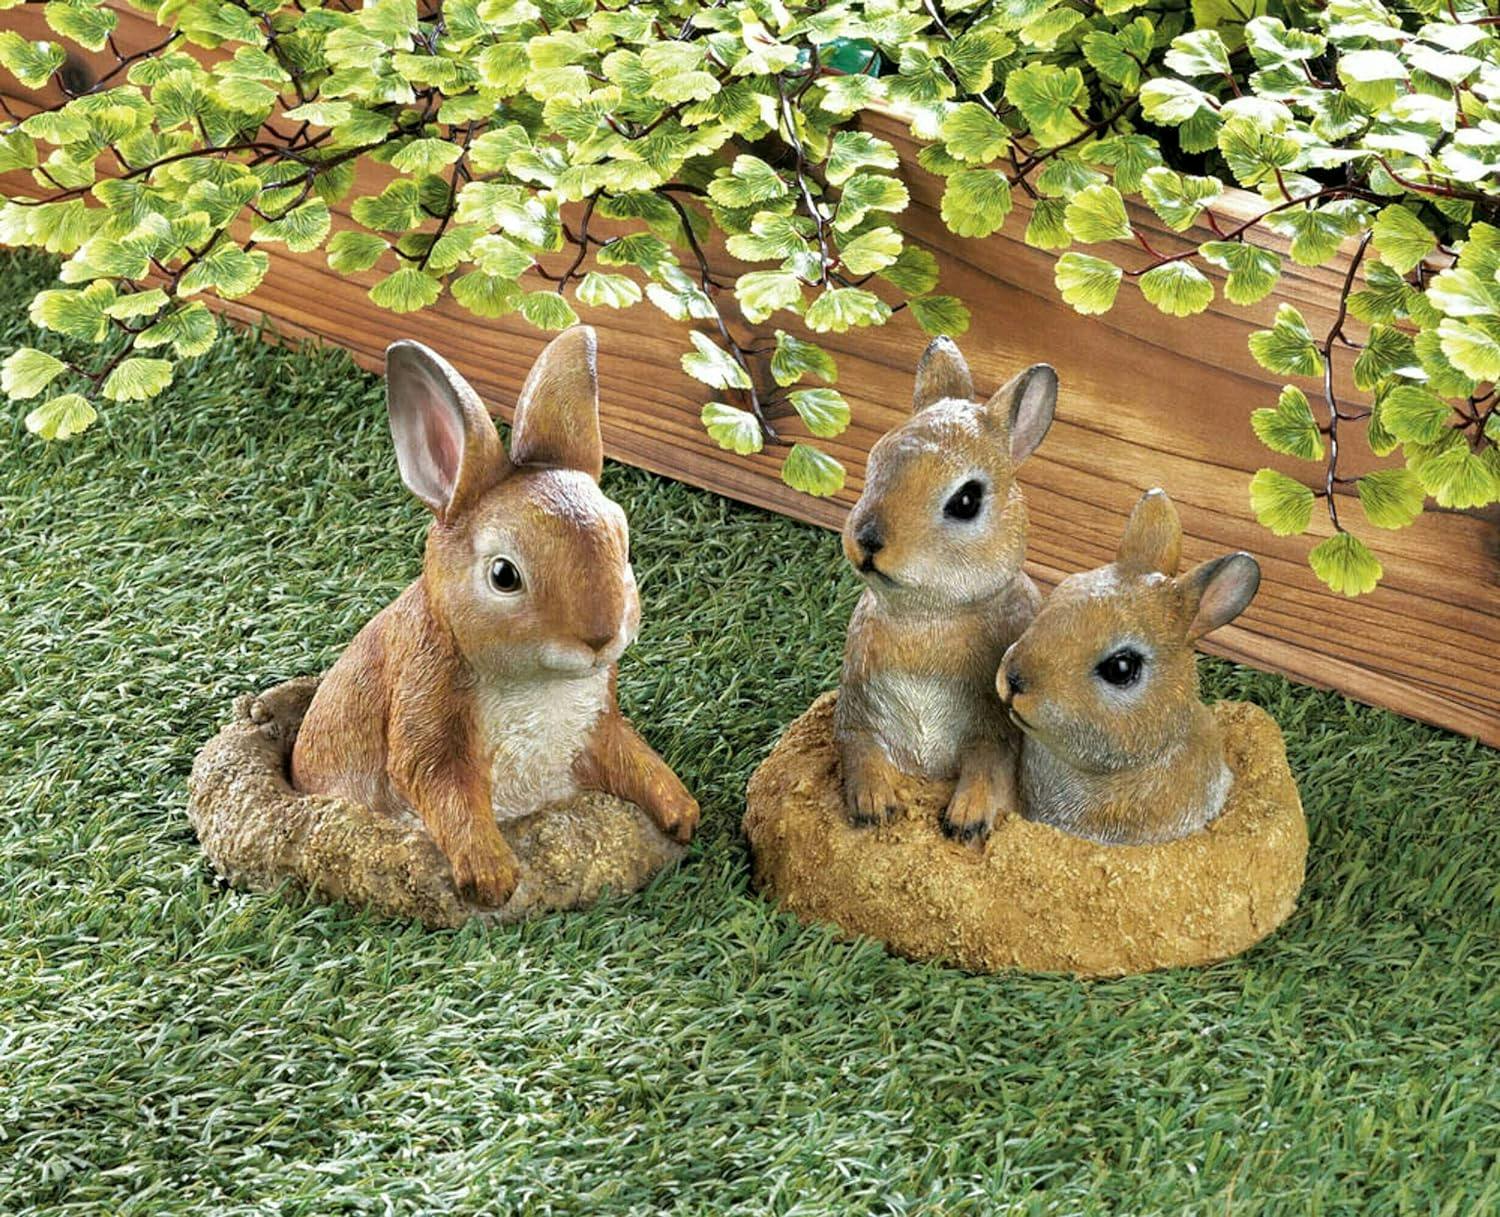 Curious Bunny Whimsical Garden Sculpture in Subtle Tones